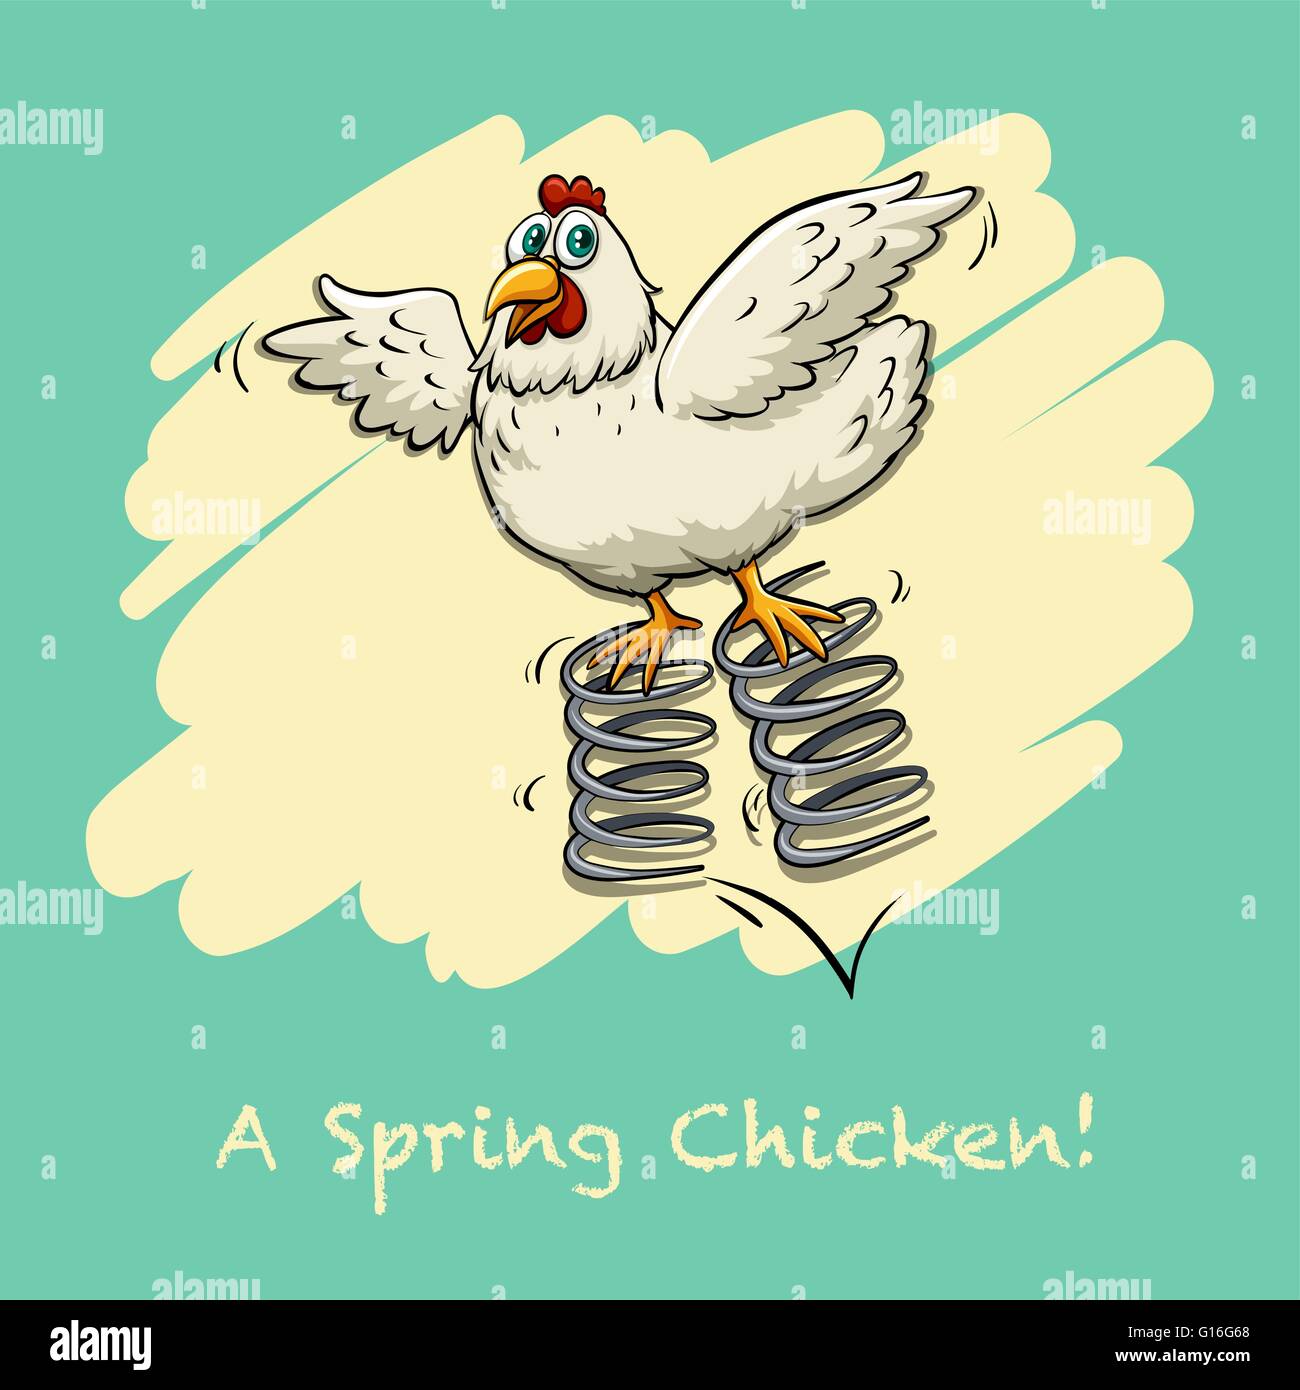 Chicken bouncing on springs illustration Stock Vector